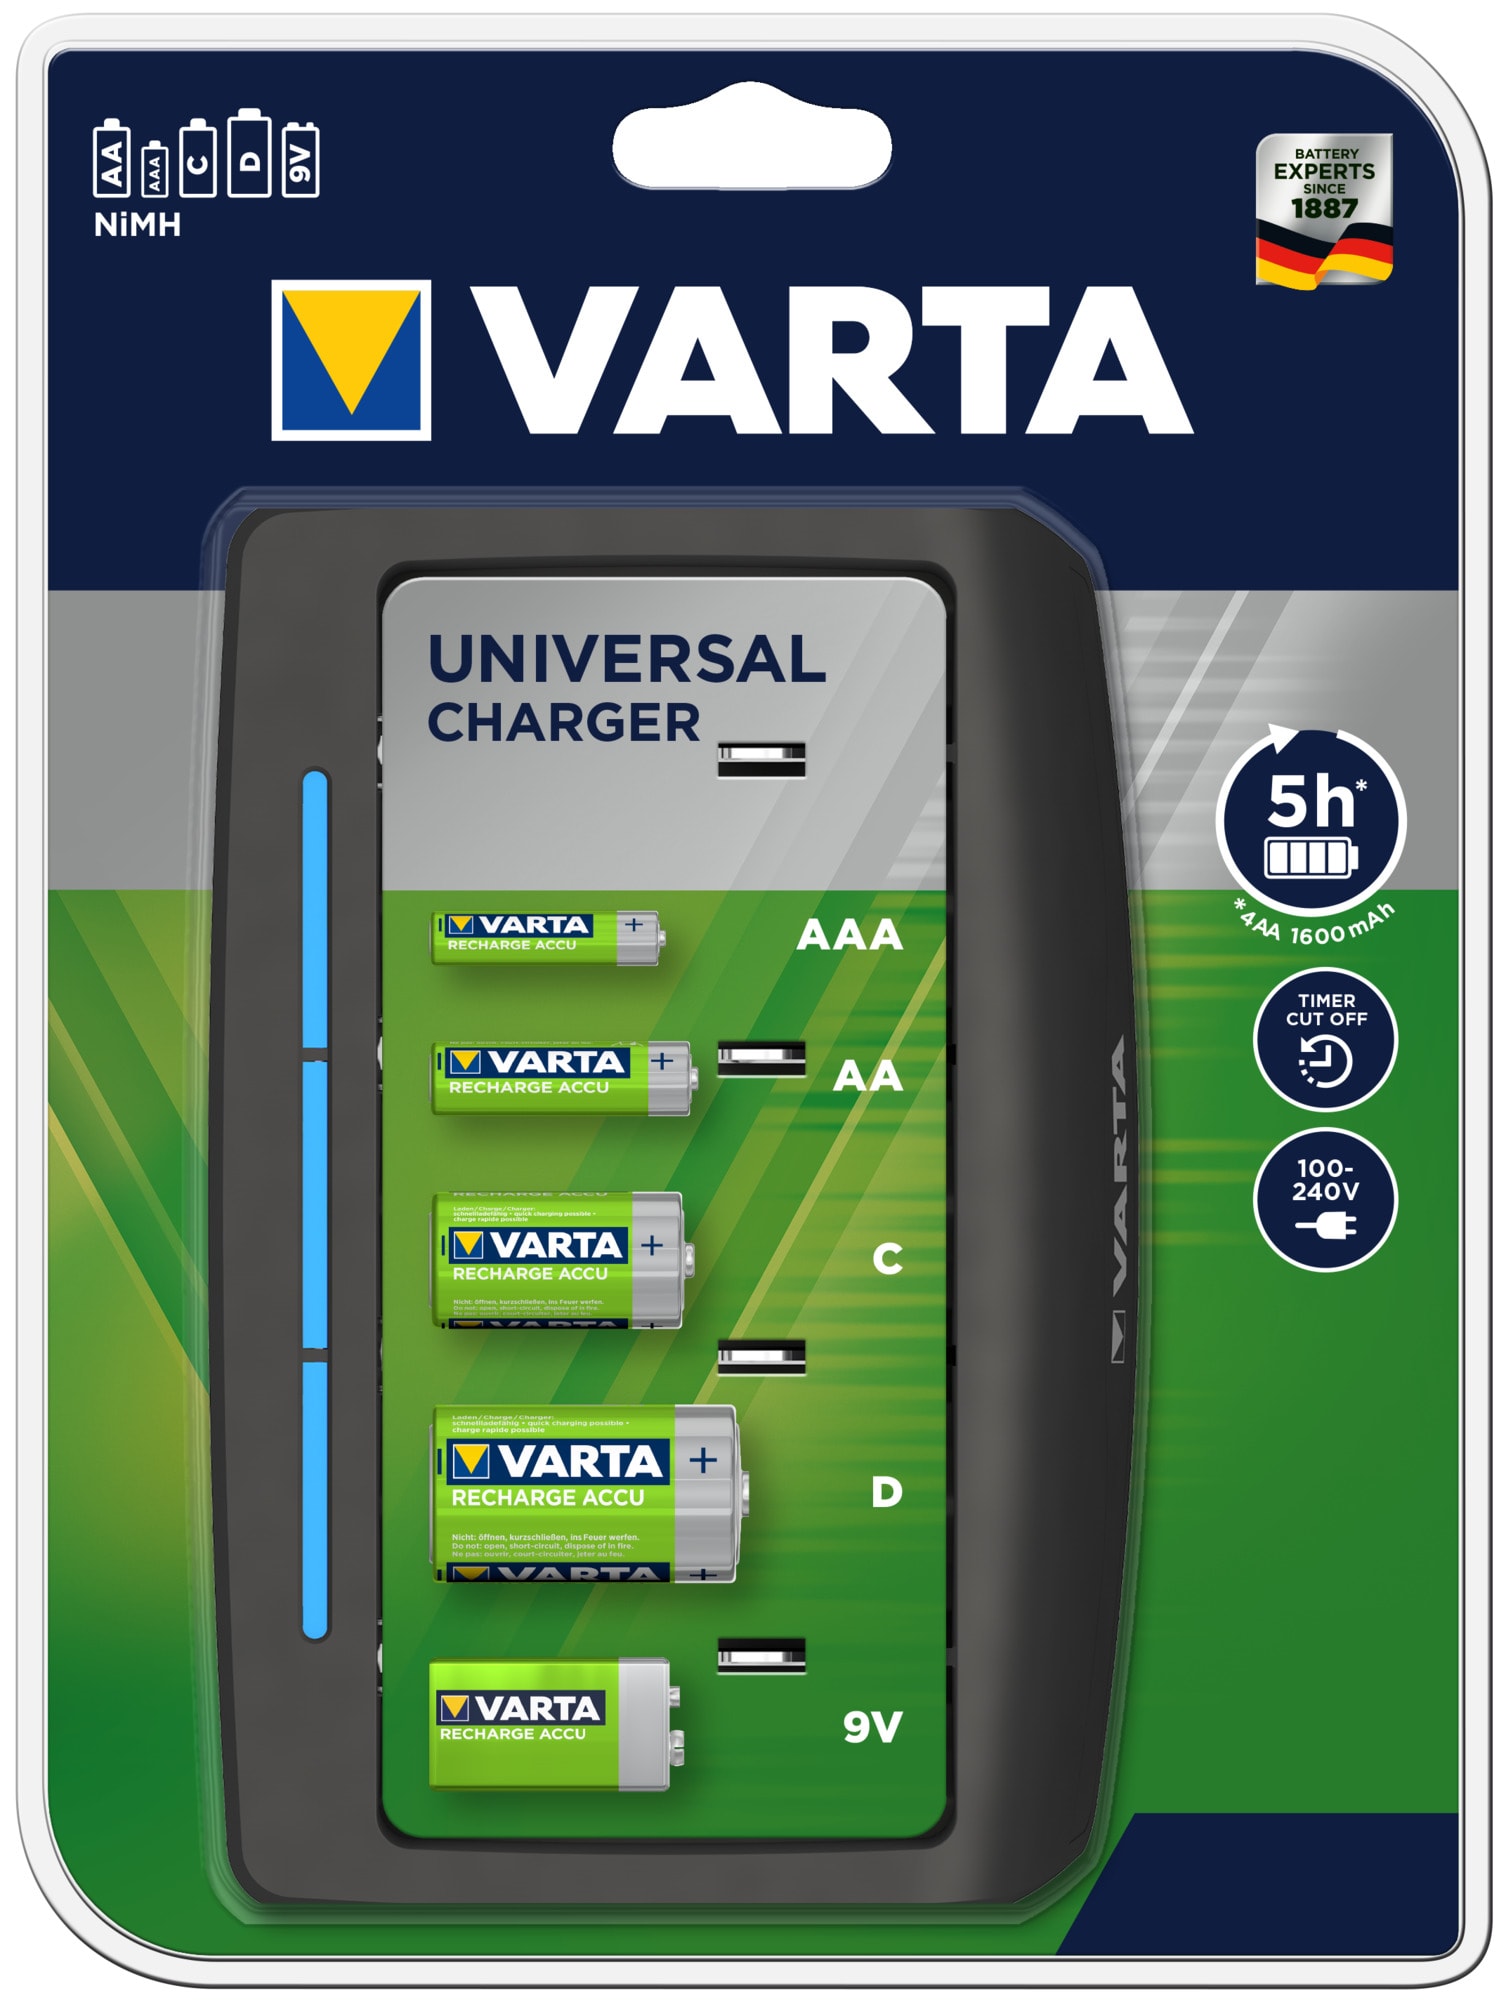 Varta - Chargeur universel